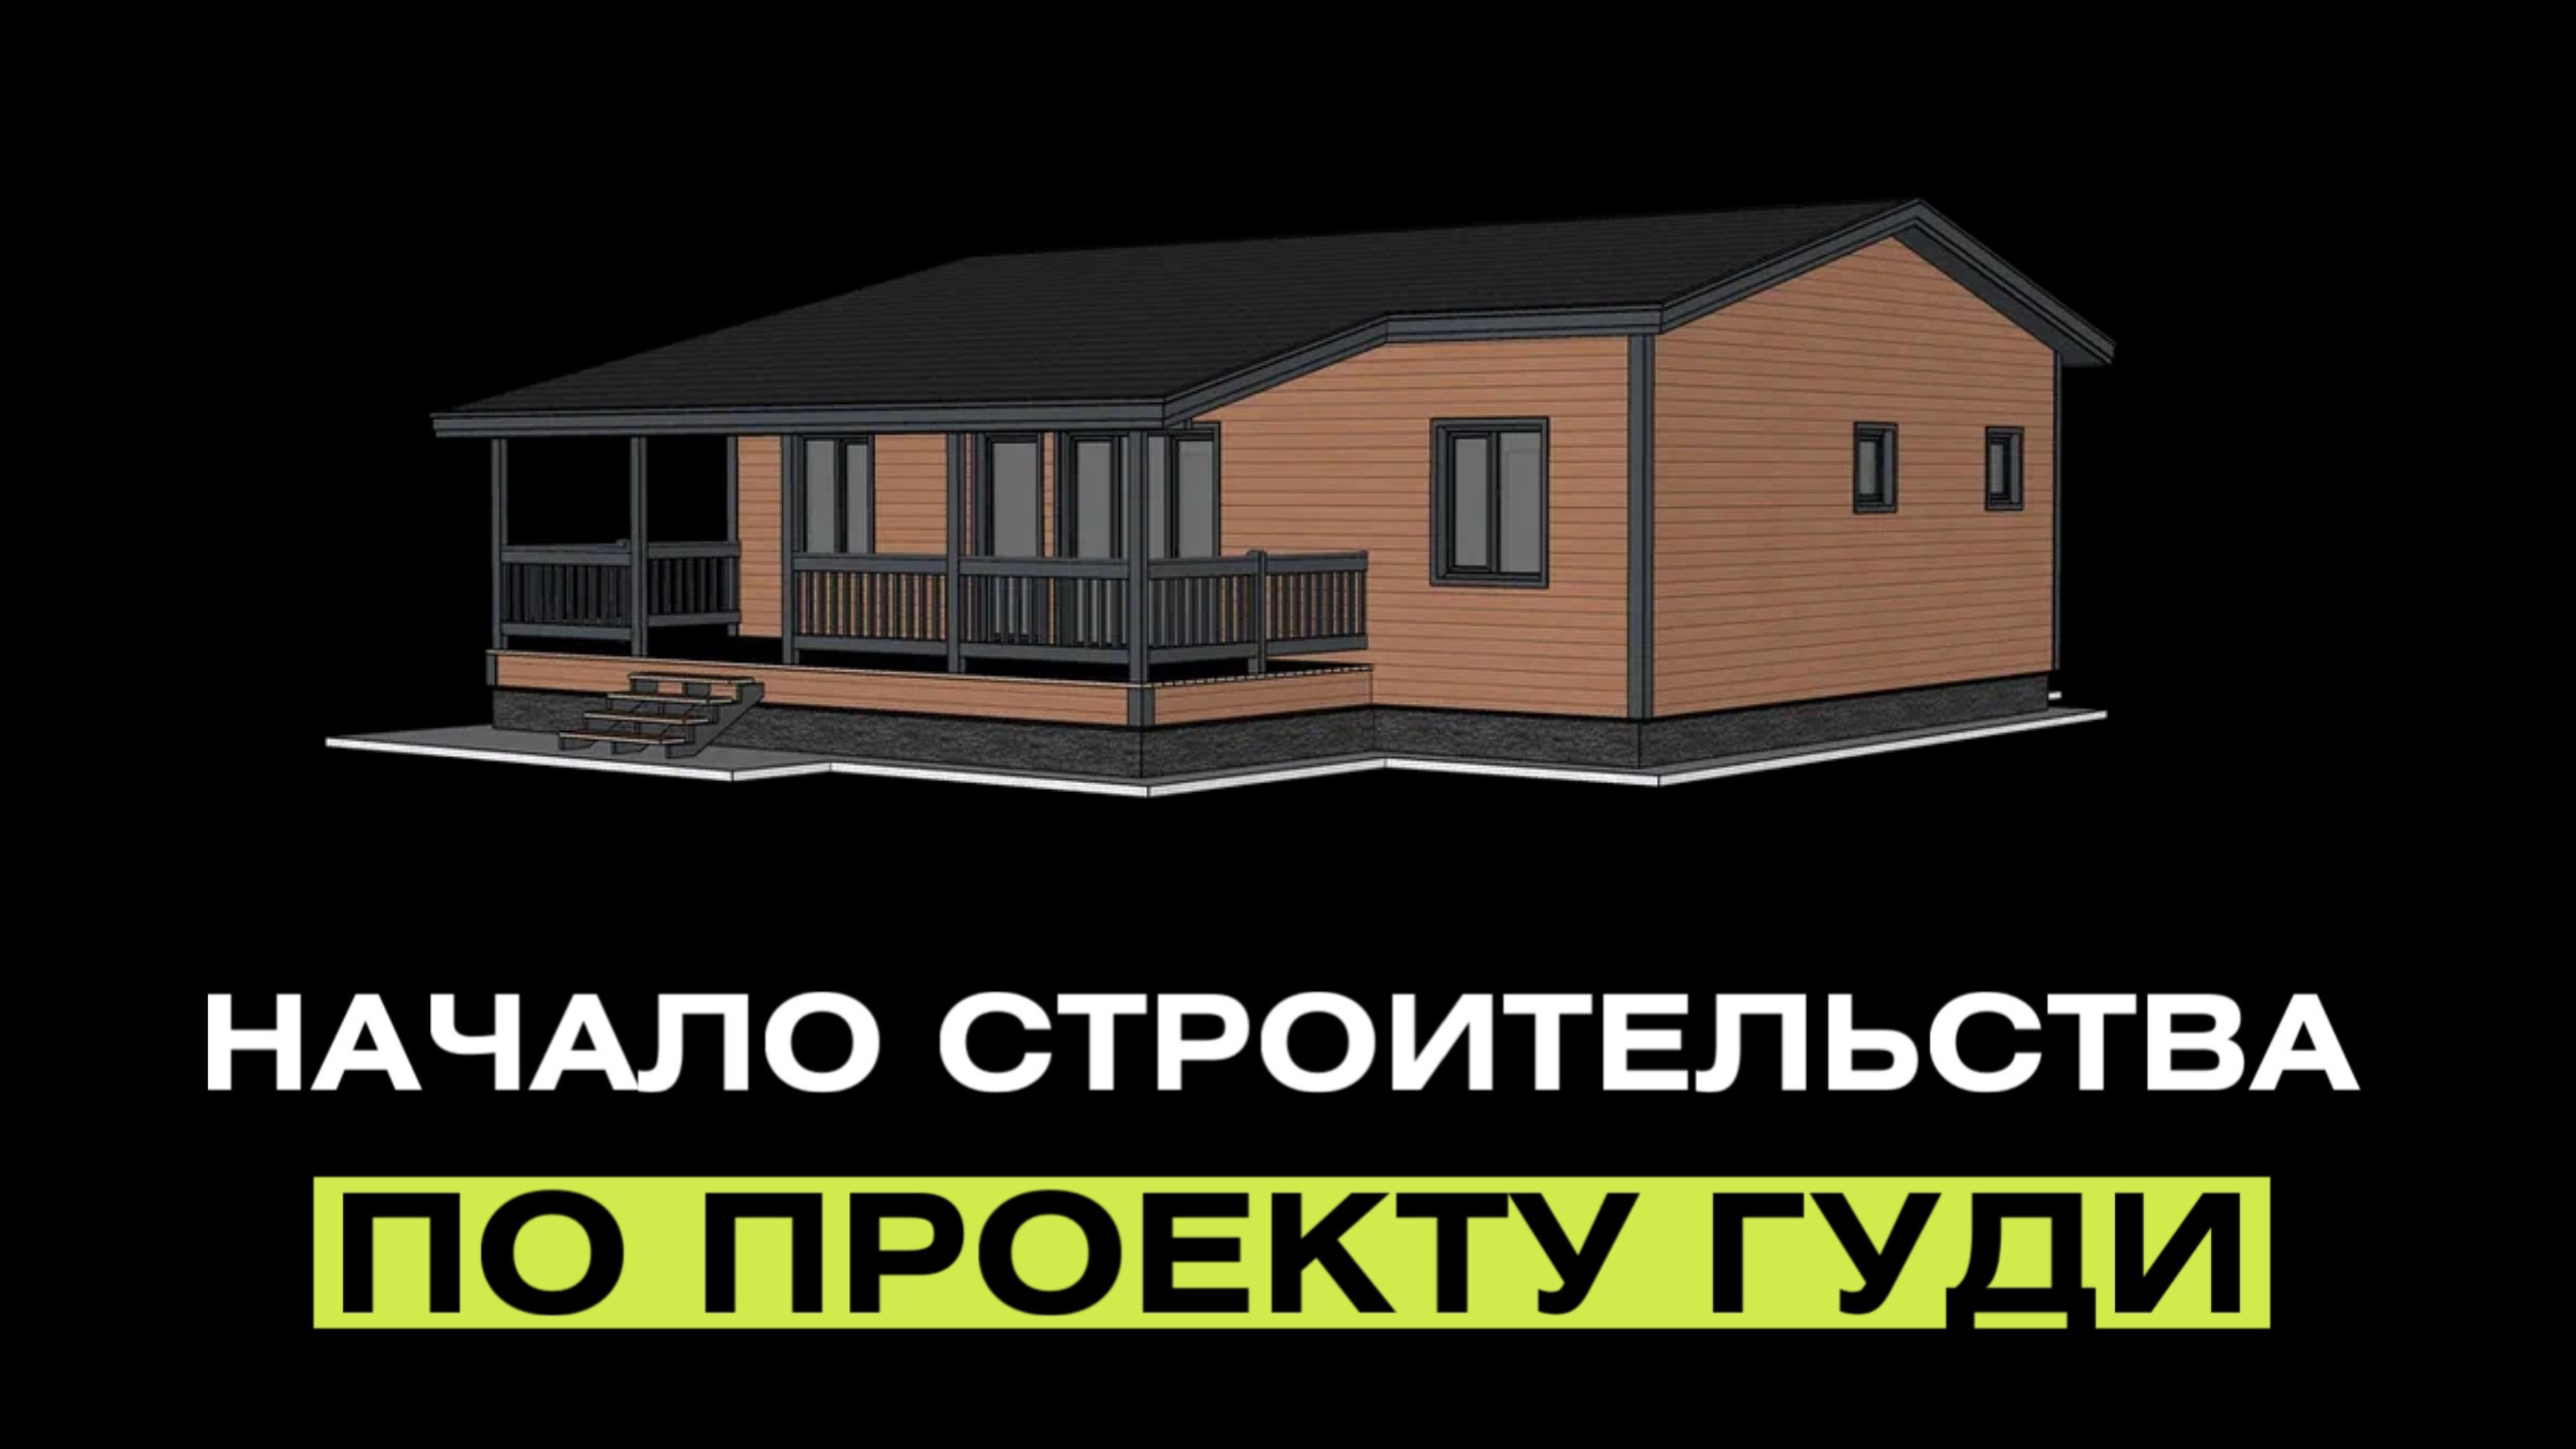 Начало строительства дома по проекту ГУДИ